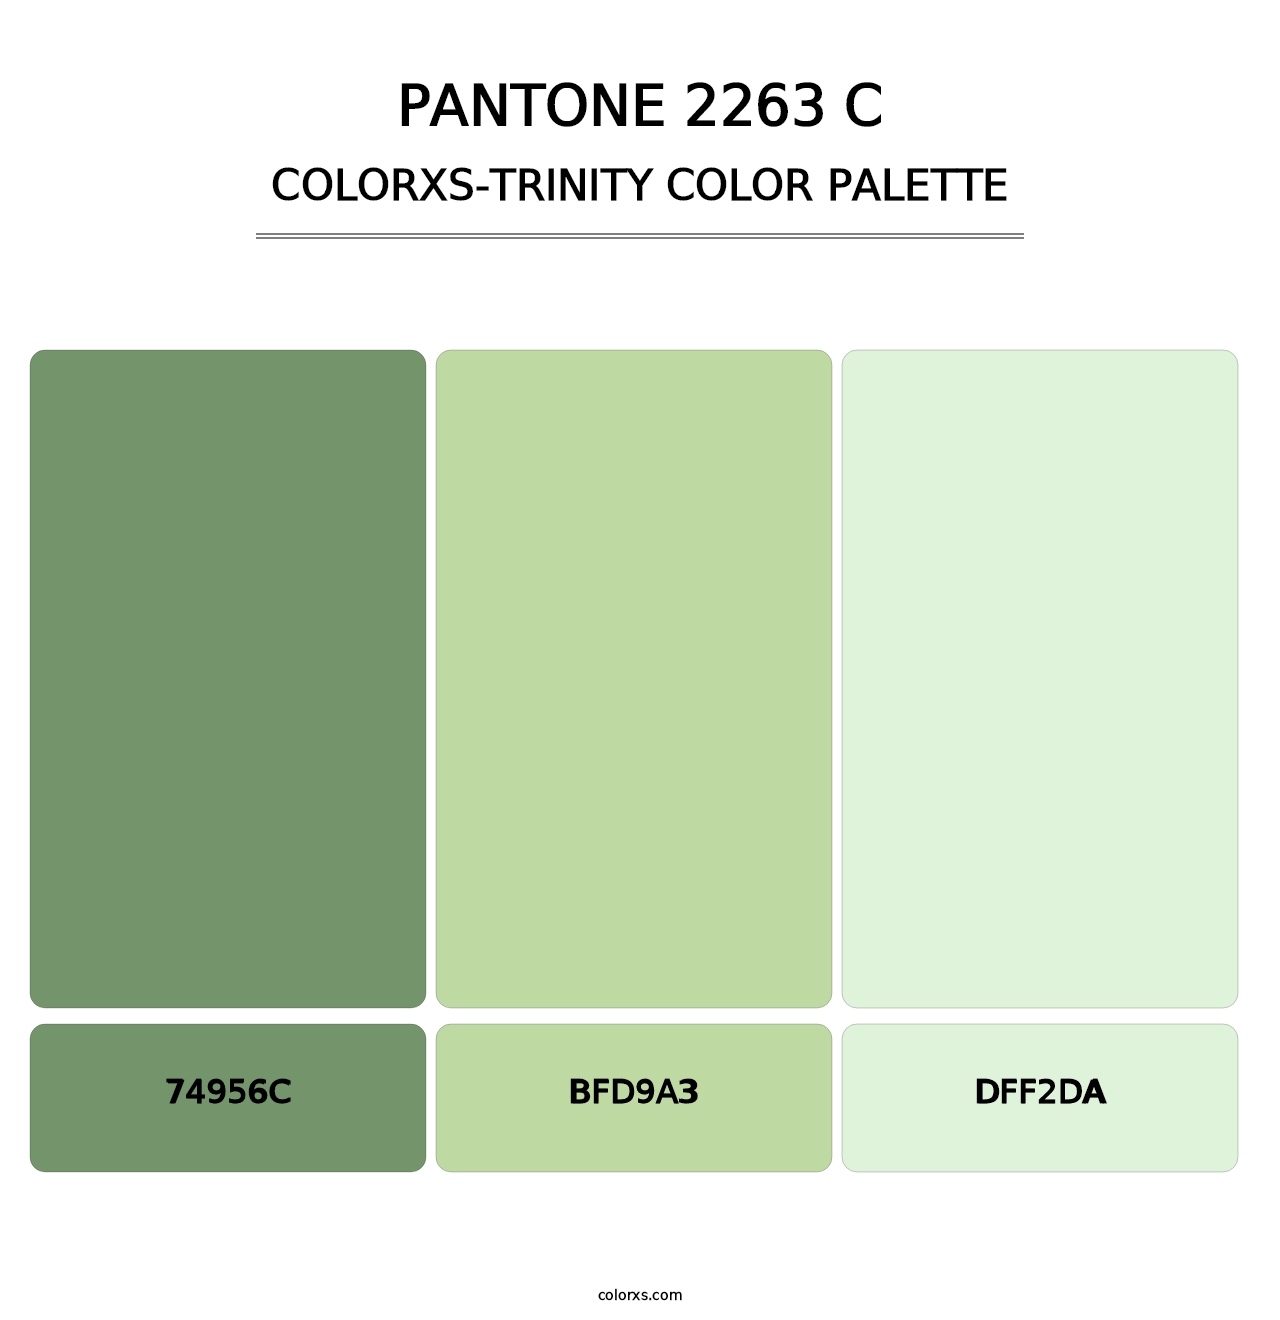 PANTONE 2263 C - Colorxs Trinity Palette